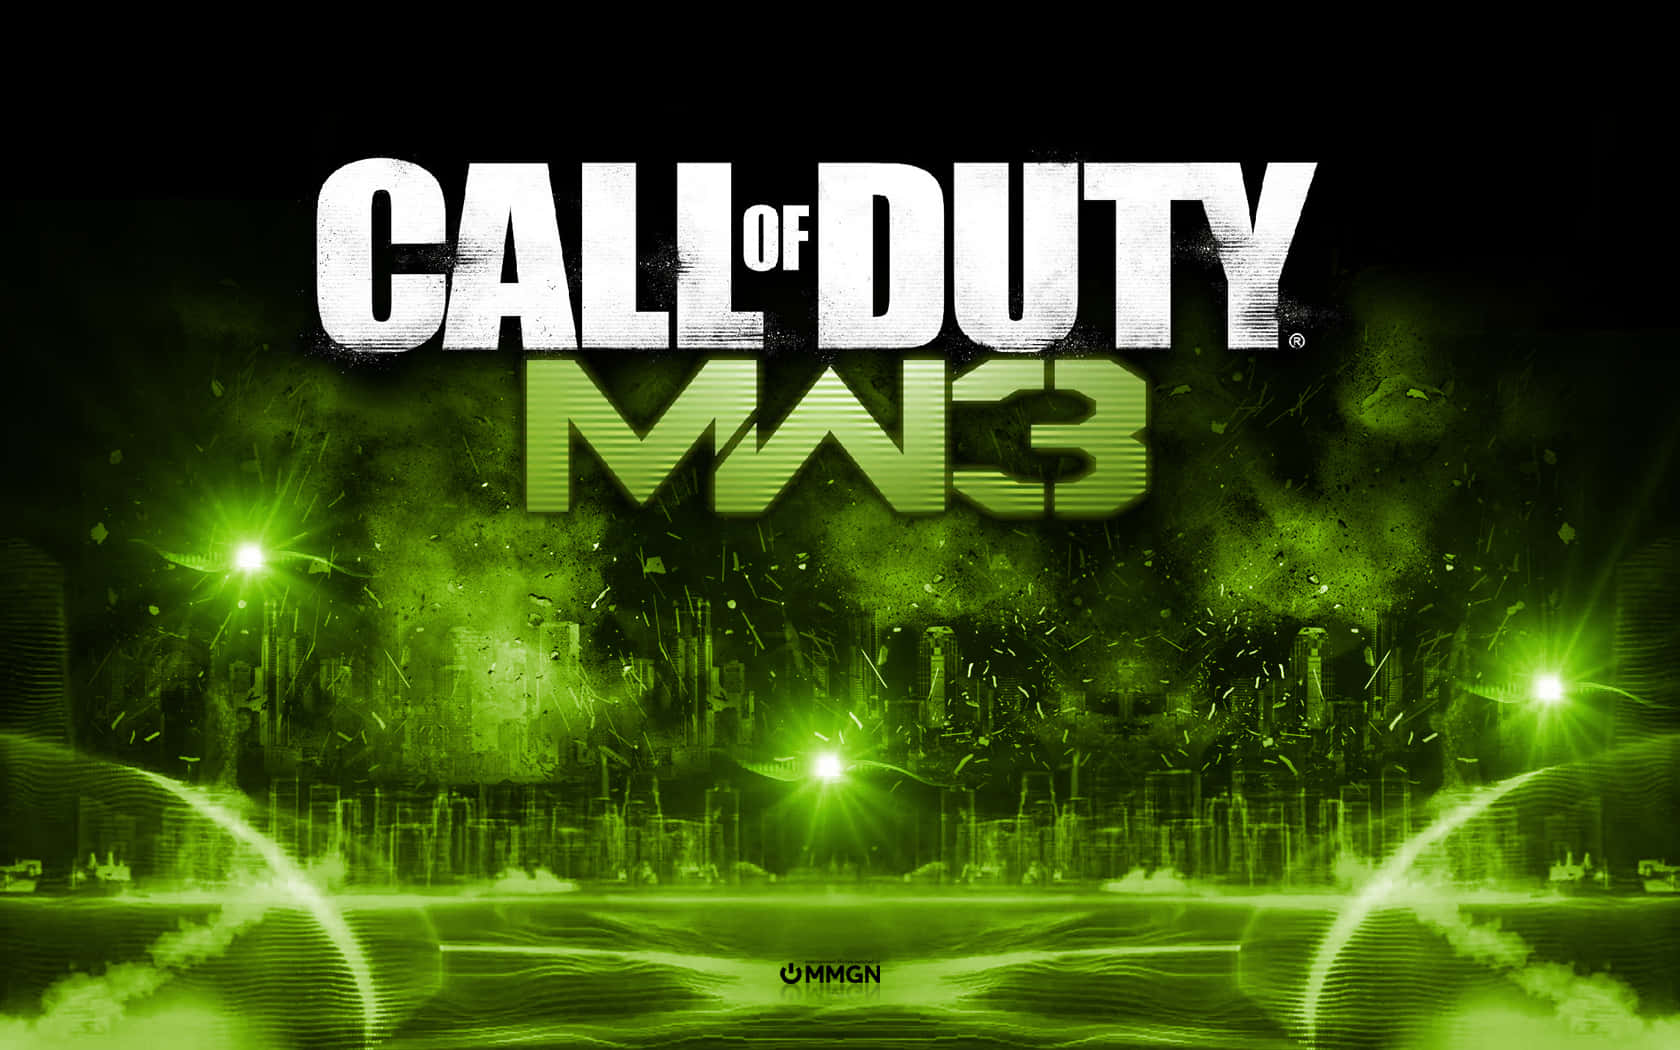 Callof Duty M W3 Game Title Wallpaper